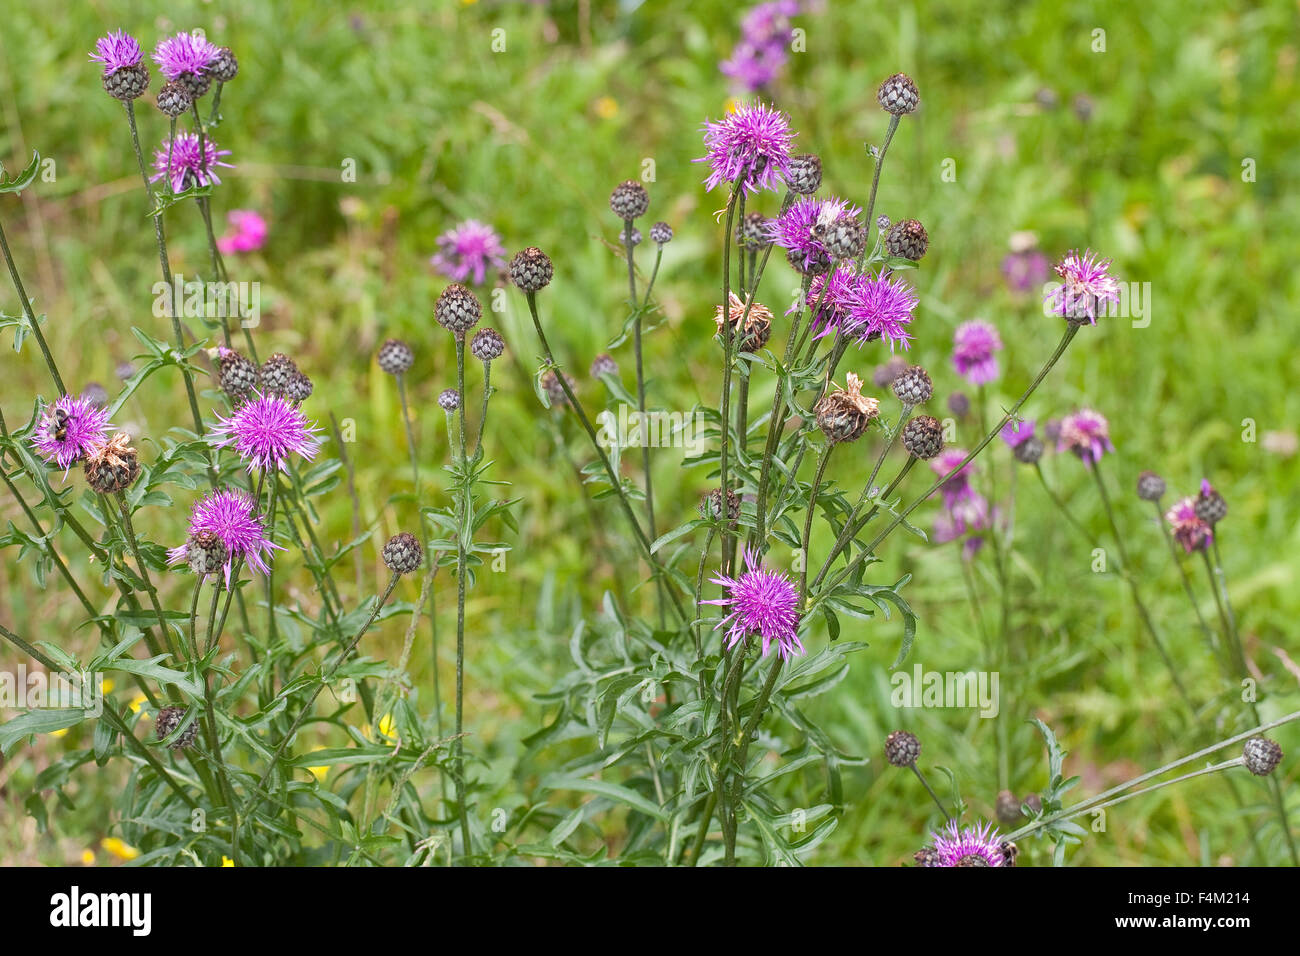 Greater Knapweed, Skabiosen-Flockenblume, Fritschs Flockenblume, Centaurea scabiosa fritschii, Centaurea grinensis fritschii Stock Photo